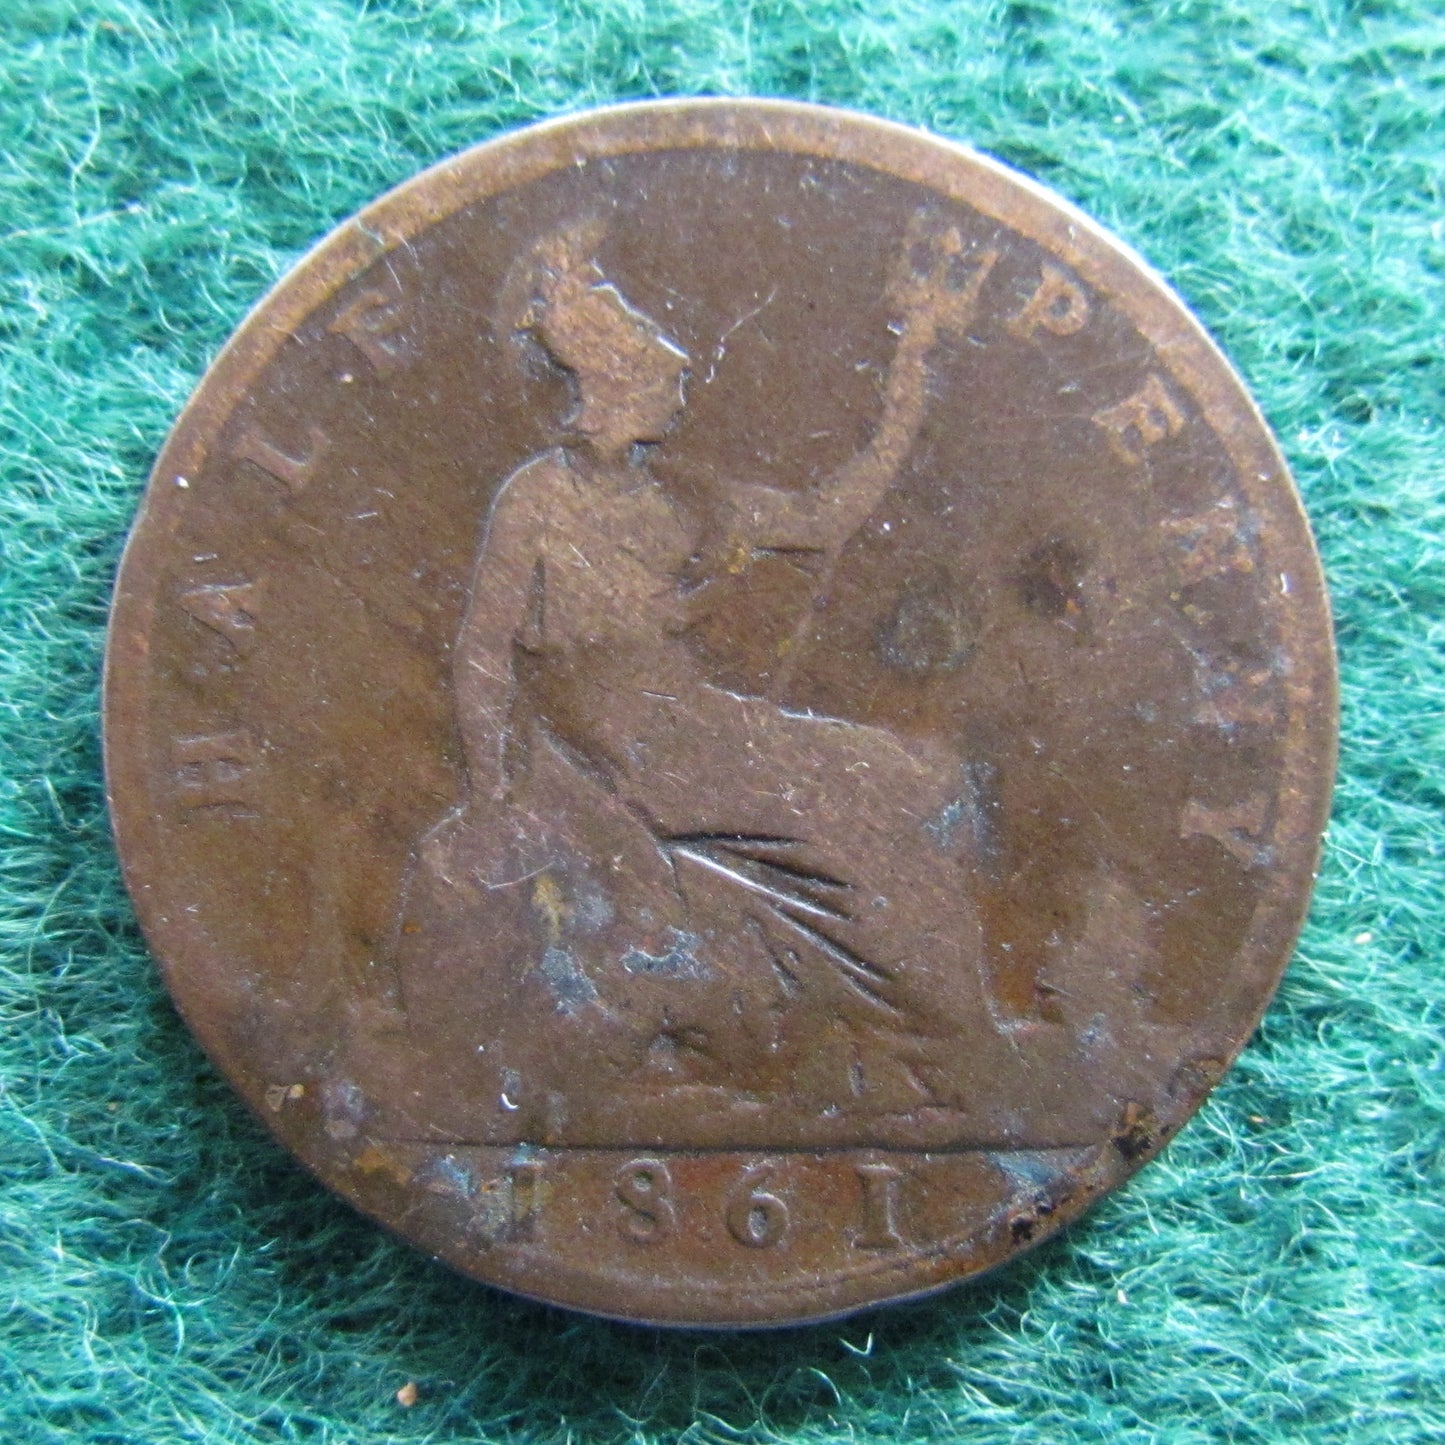 GB British UK English 1861 Half Penny Queen Victoria Coin - Bun Head